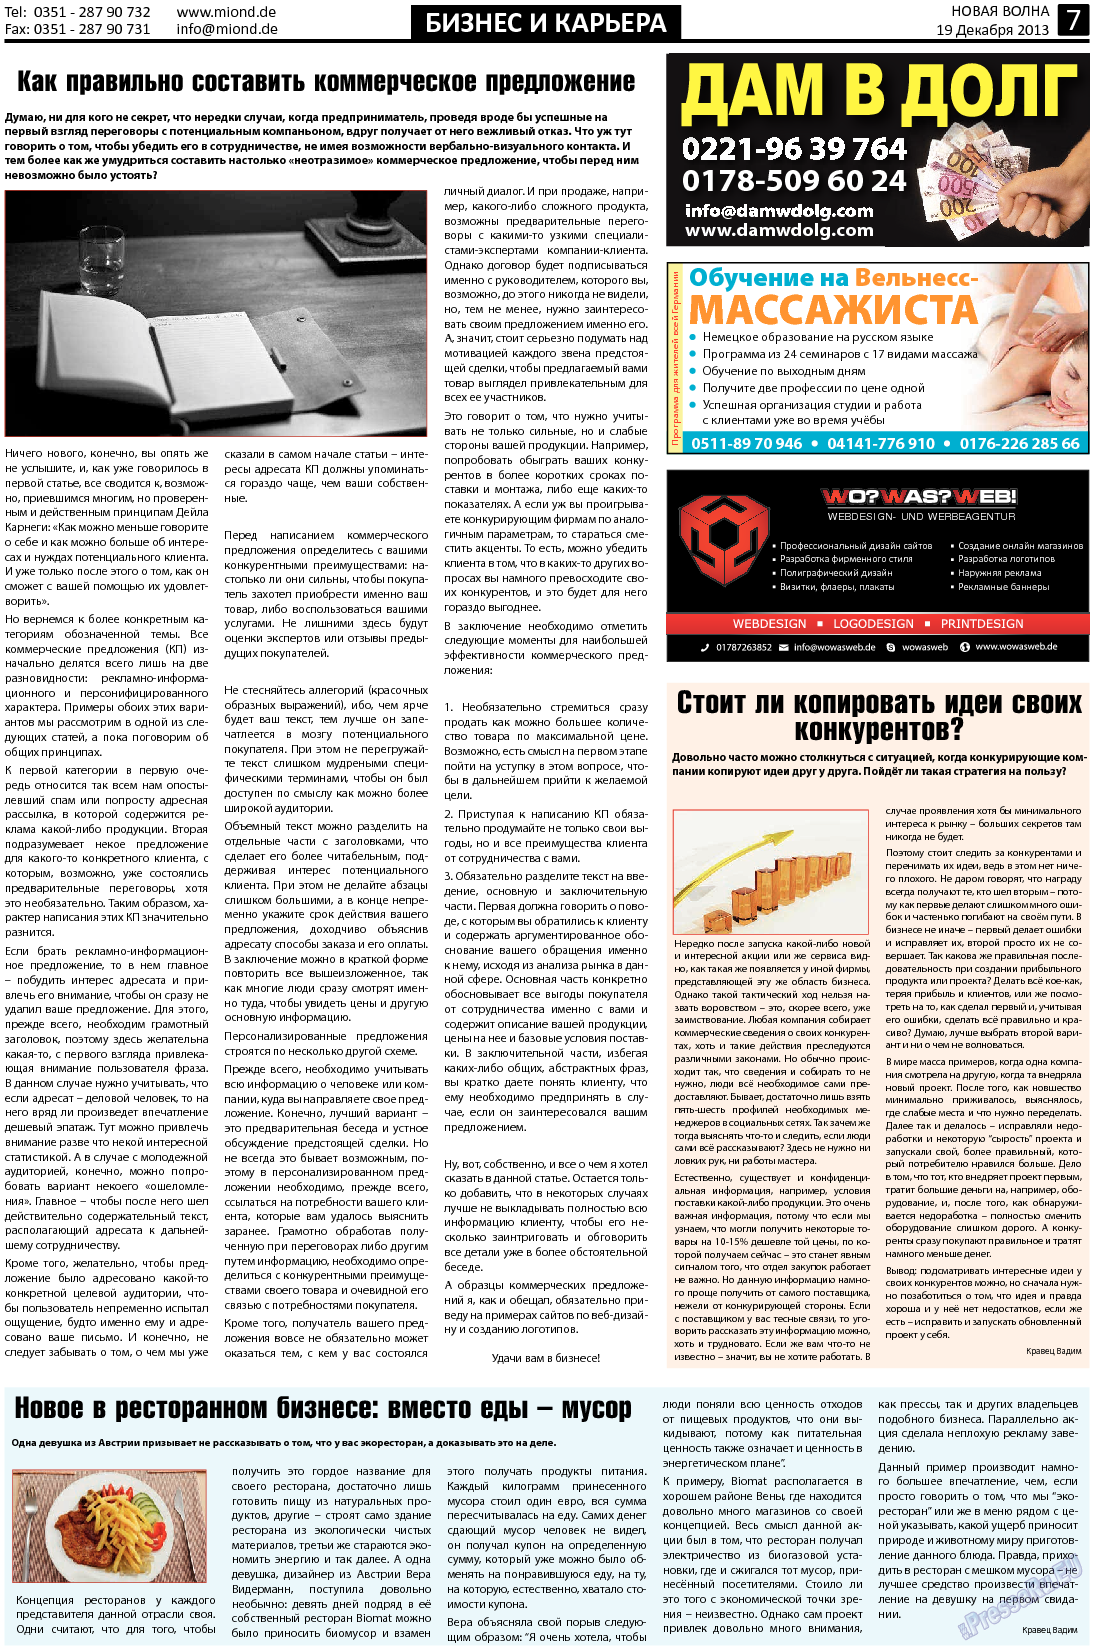 Новая Wолна, газета. 2013 №51 стр.7